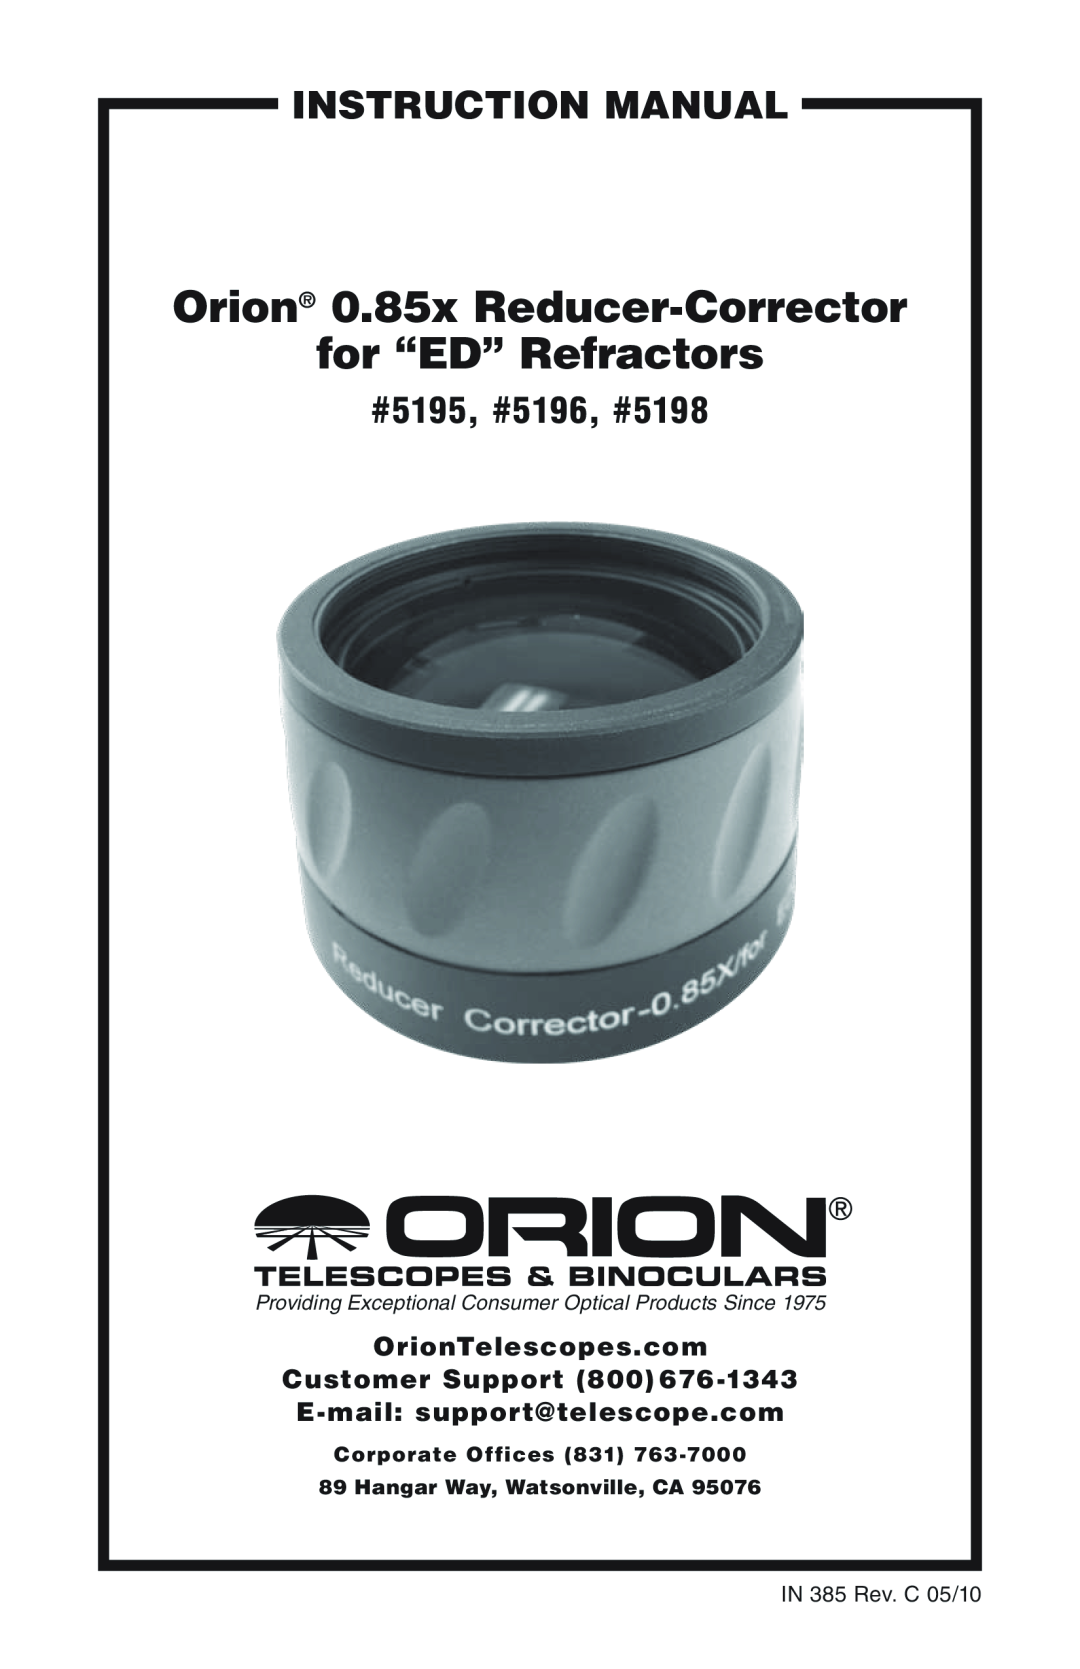 Orion instruction manual OrionTelescopes.com Customer Support 800, E-mail support@telescope.com, #5195, #5196, #5198 